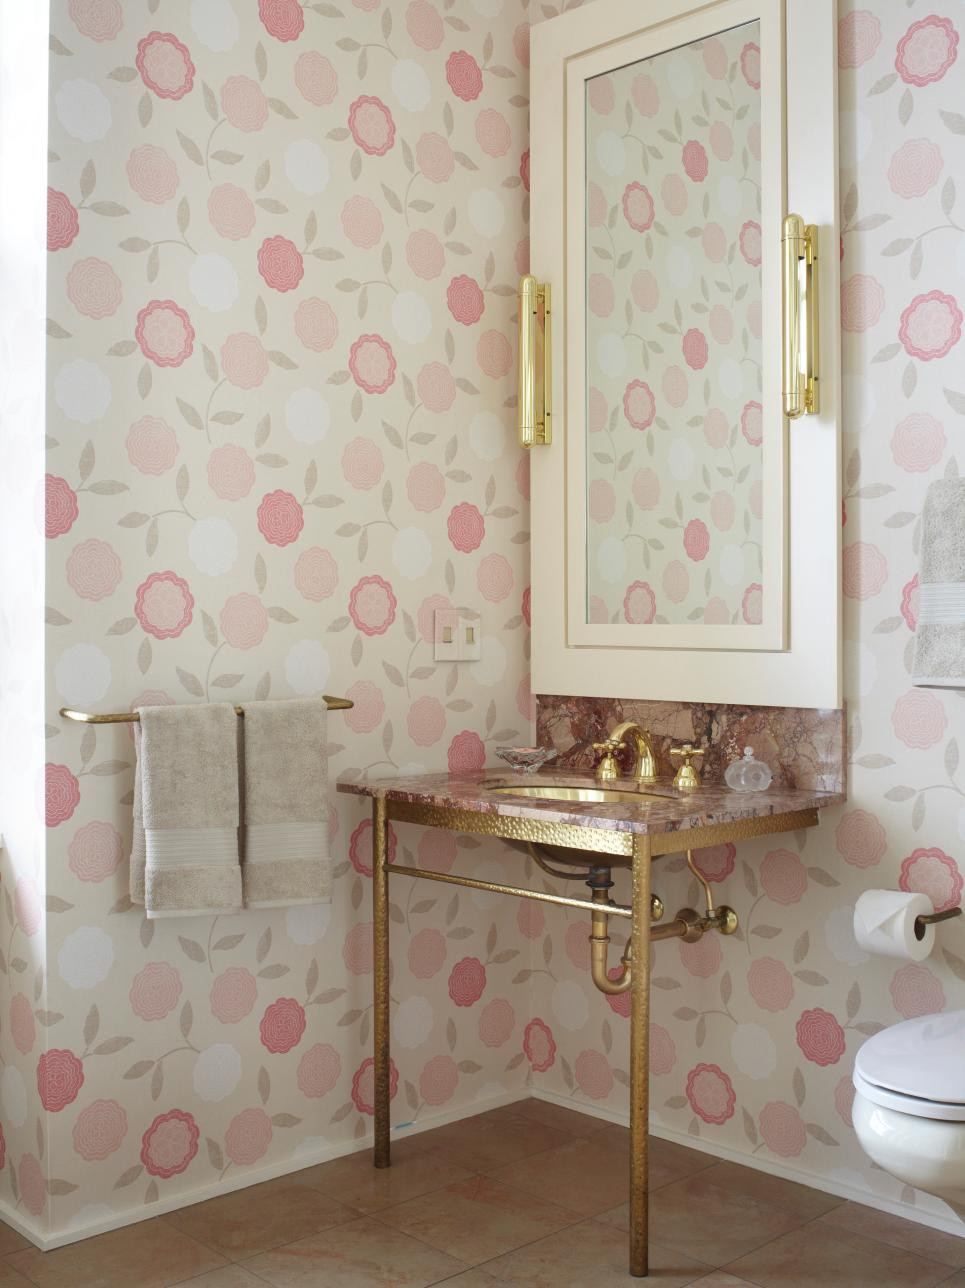 Shabby Chic Bathroom Vanity
 18 Bathrooms for Shabby Chic Design Inspiration